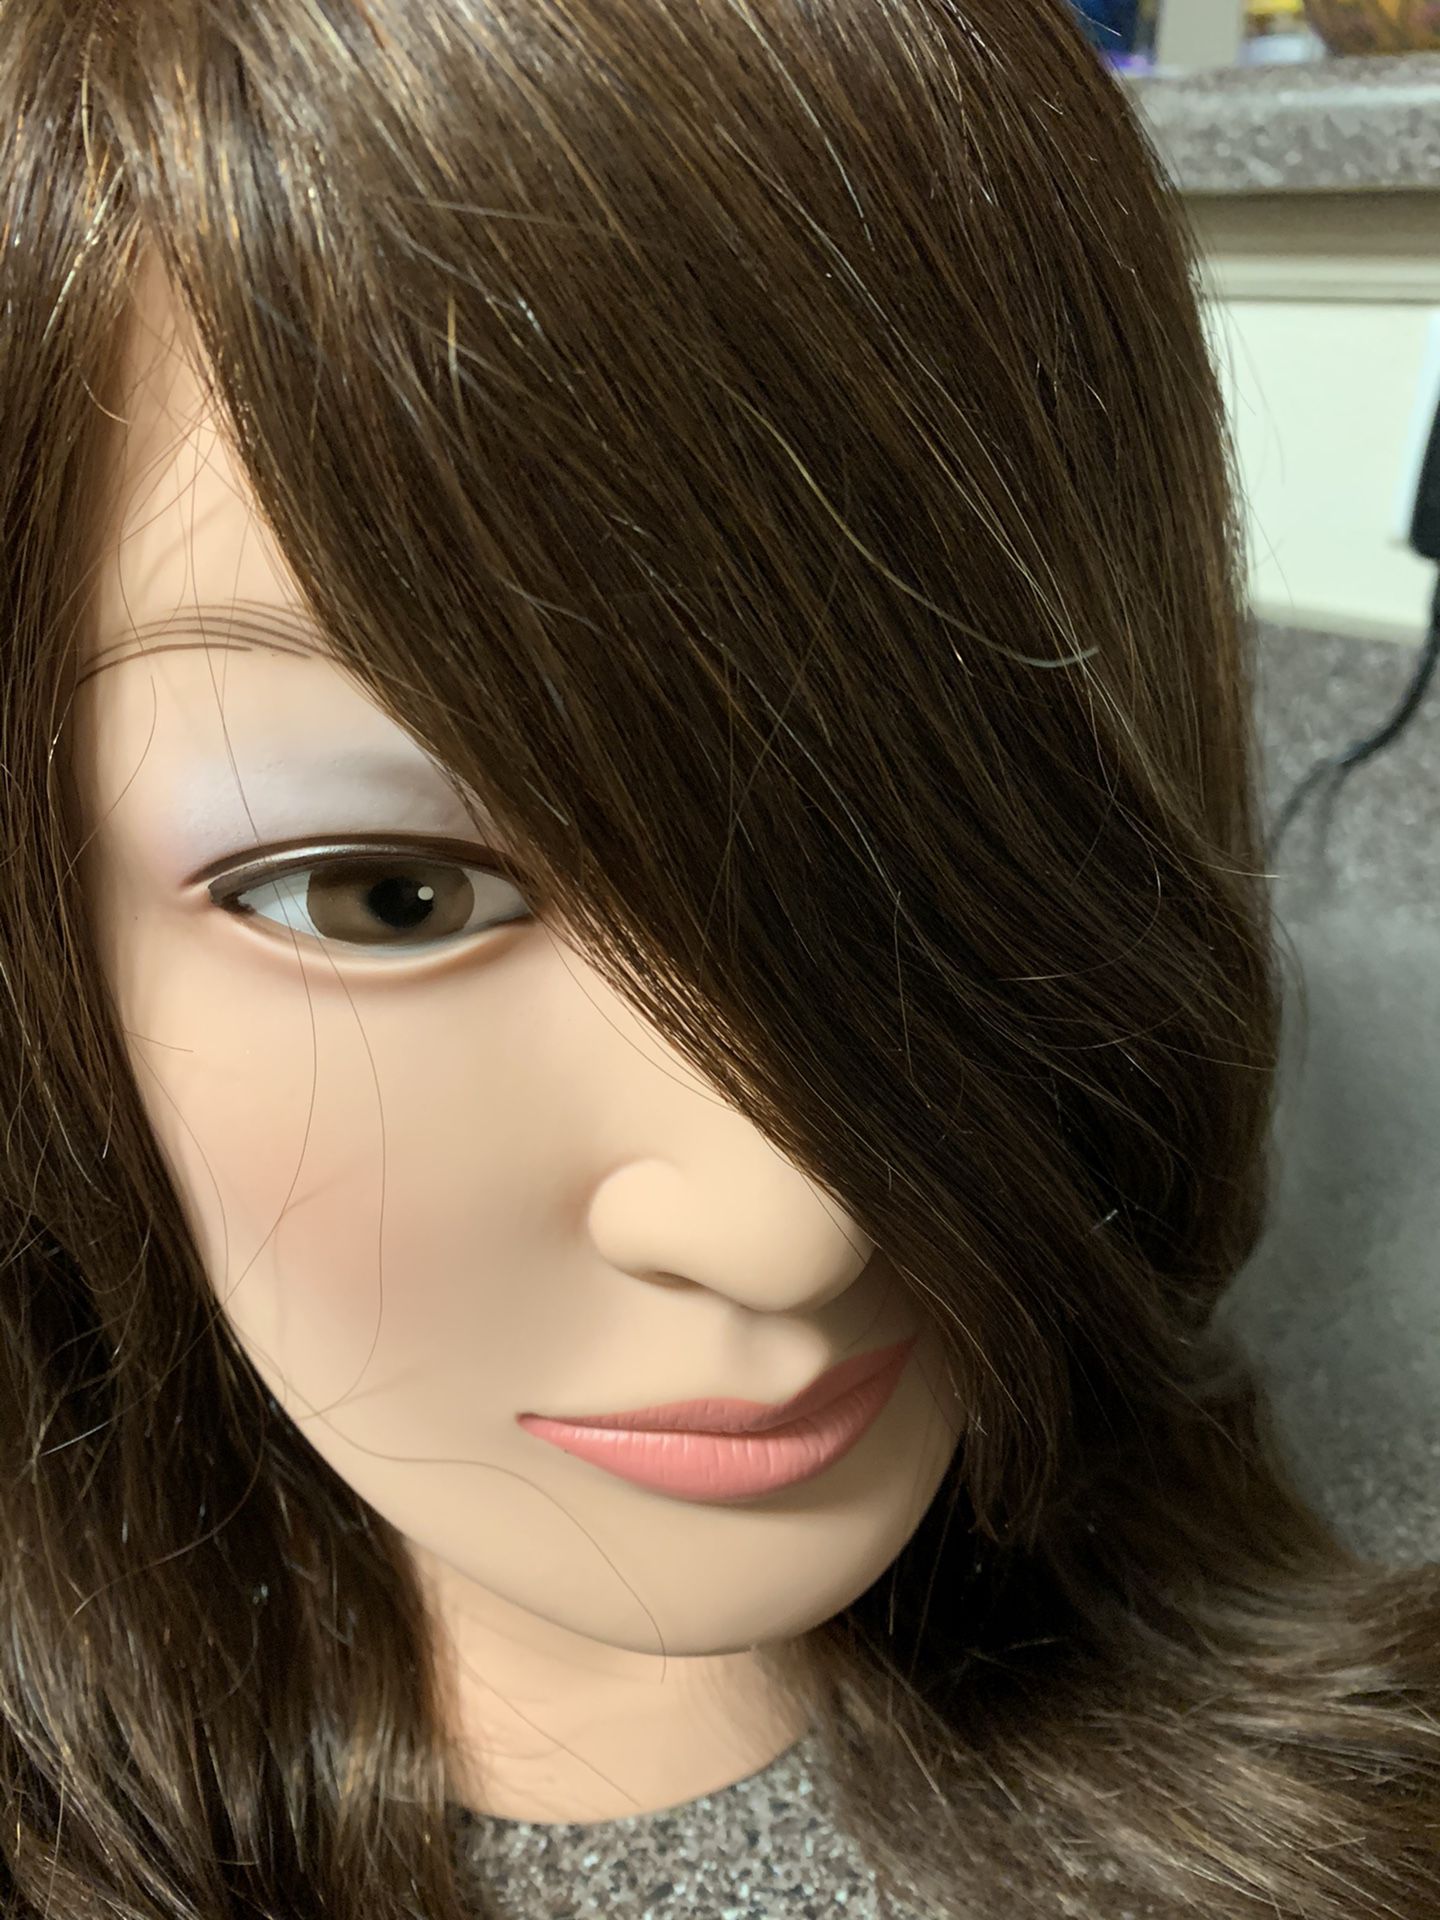 Mannequin Head 16” Human Hair for Sale in Phoenix, AZ - OfferUp